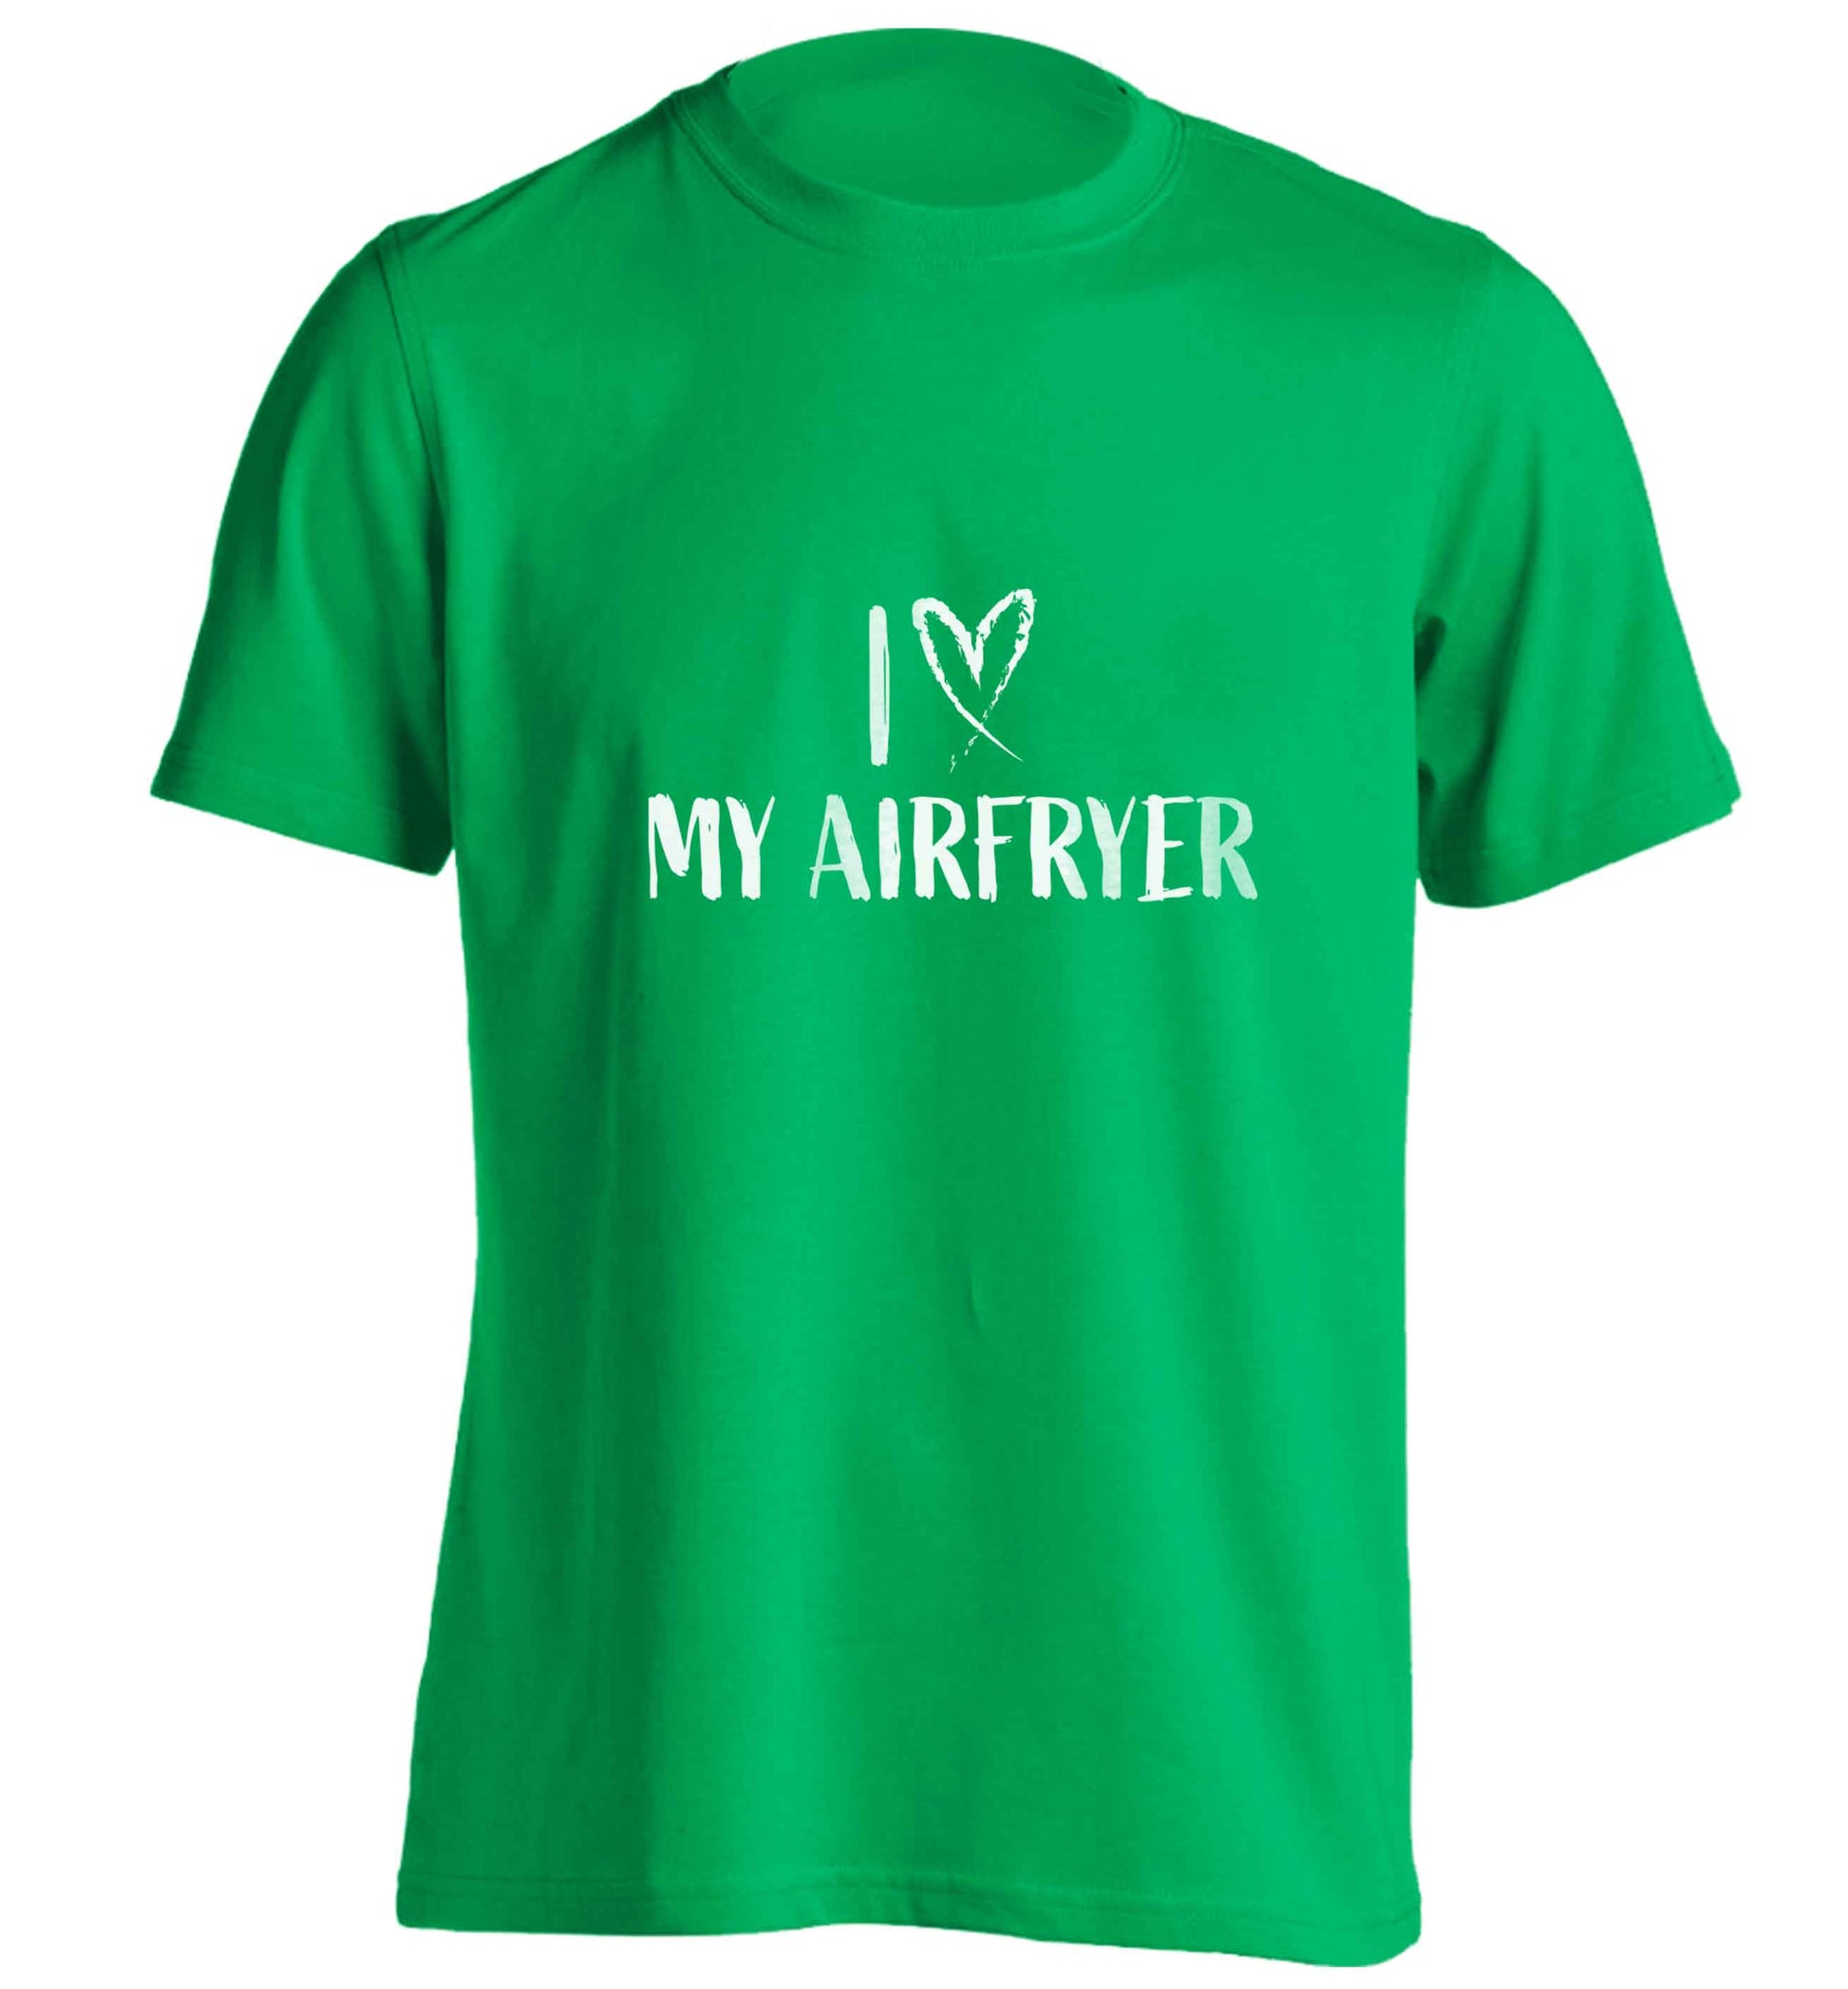 I love my airfryeradults unisex green Tshirt 2XL